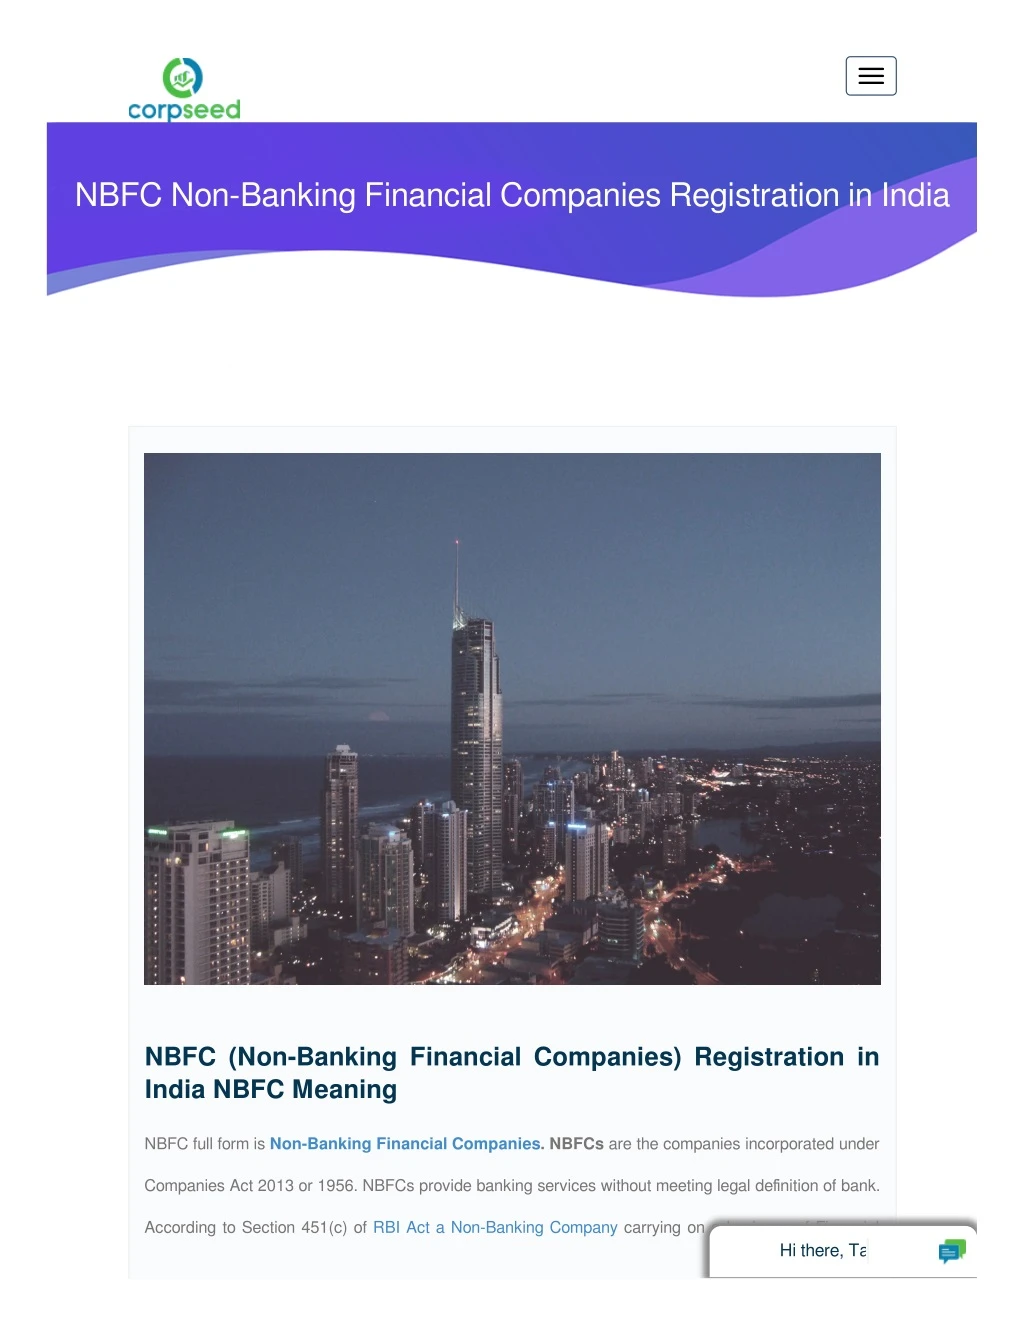 nbfc non banking financial companies registration